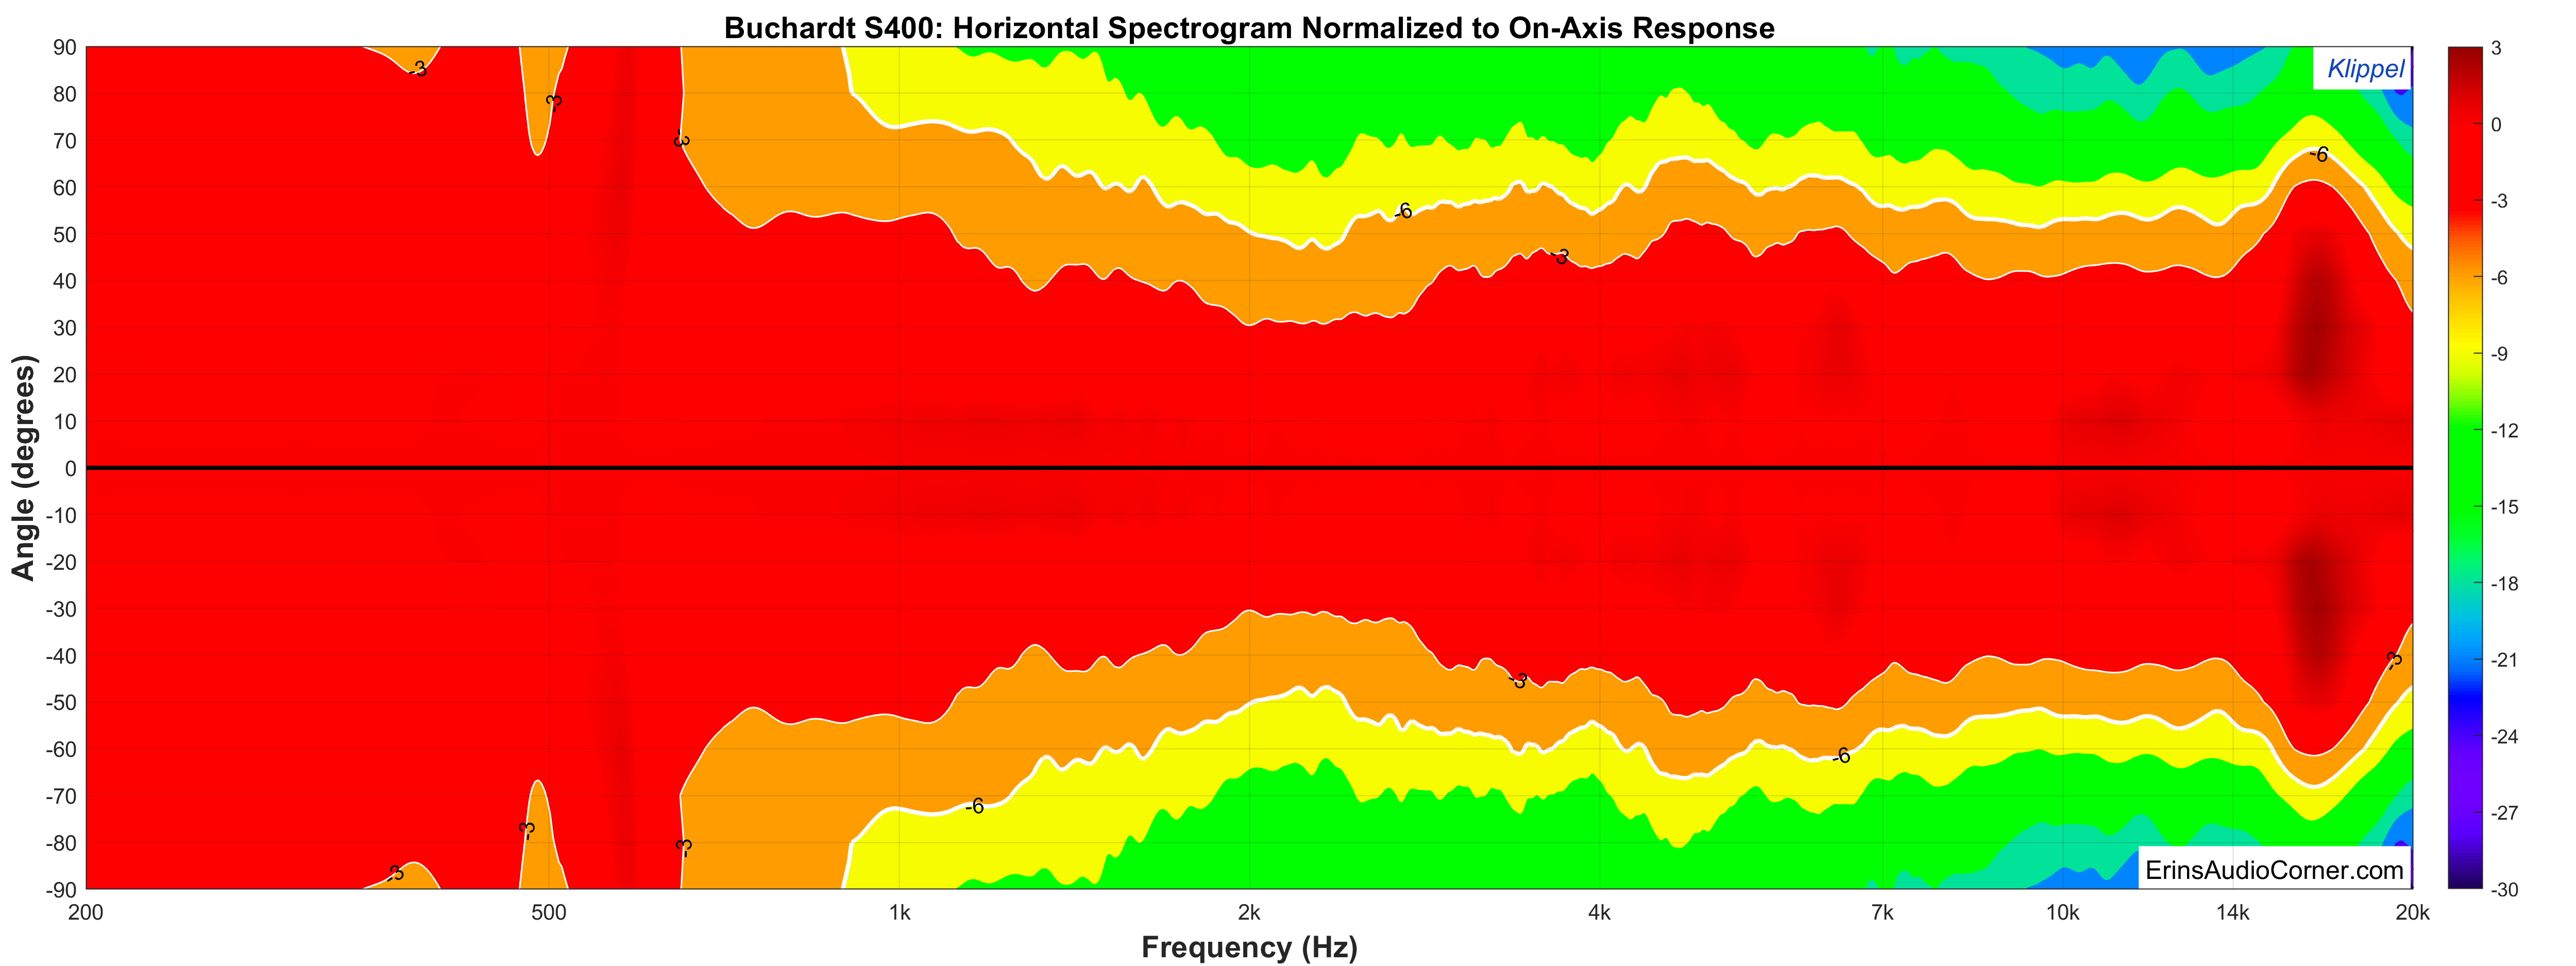 Buchardt S400 Horizontal Spectrogram.png